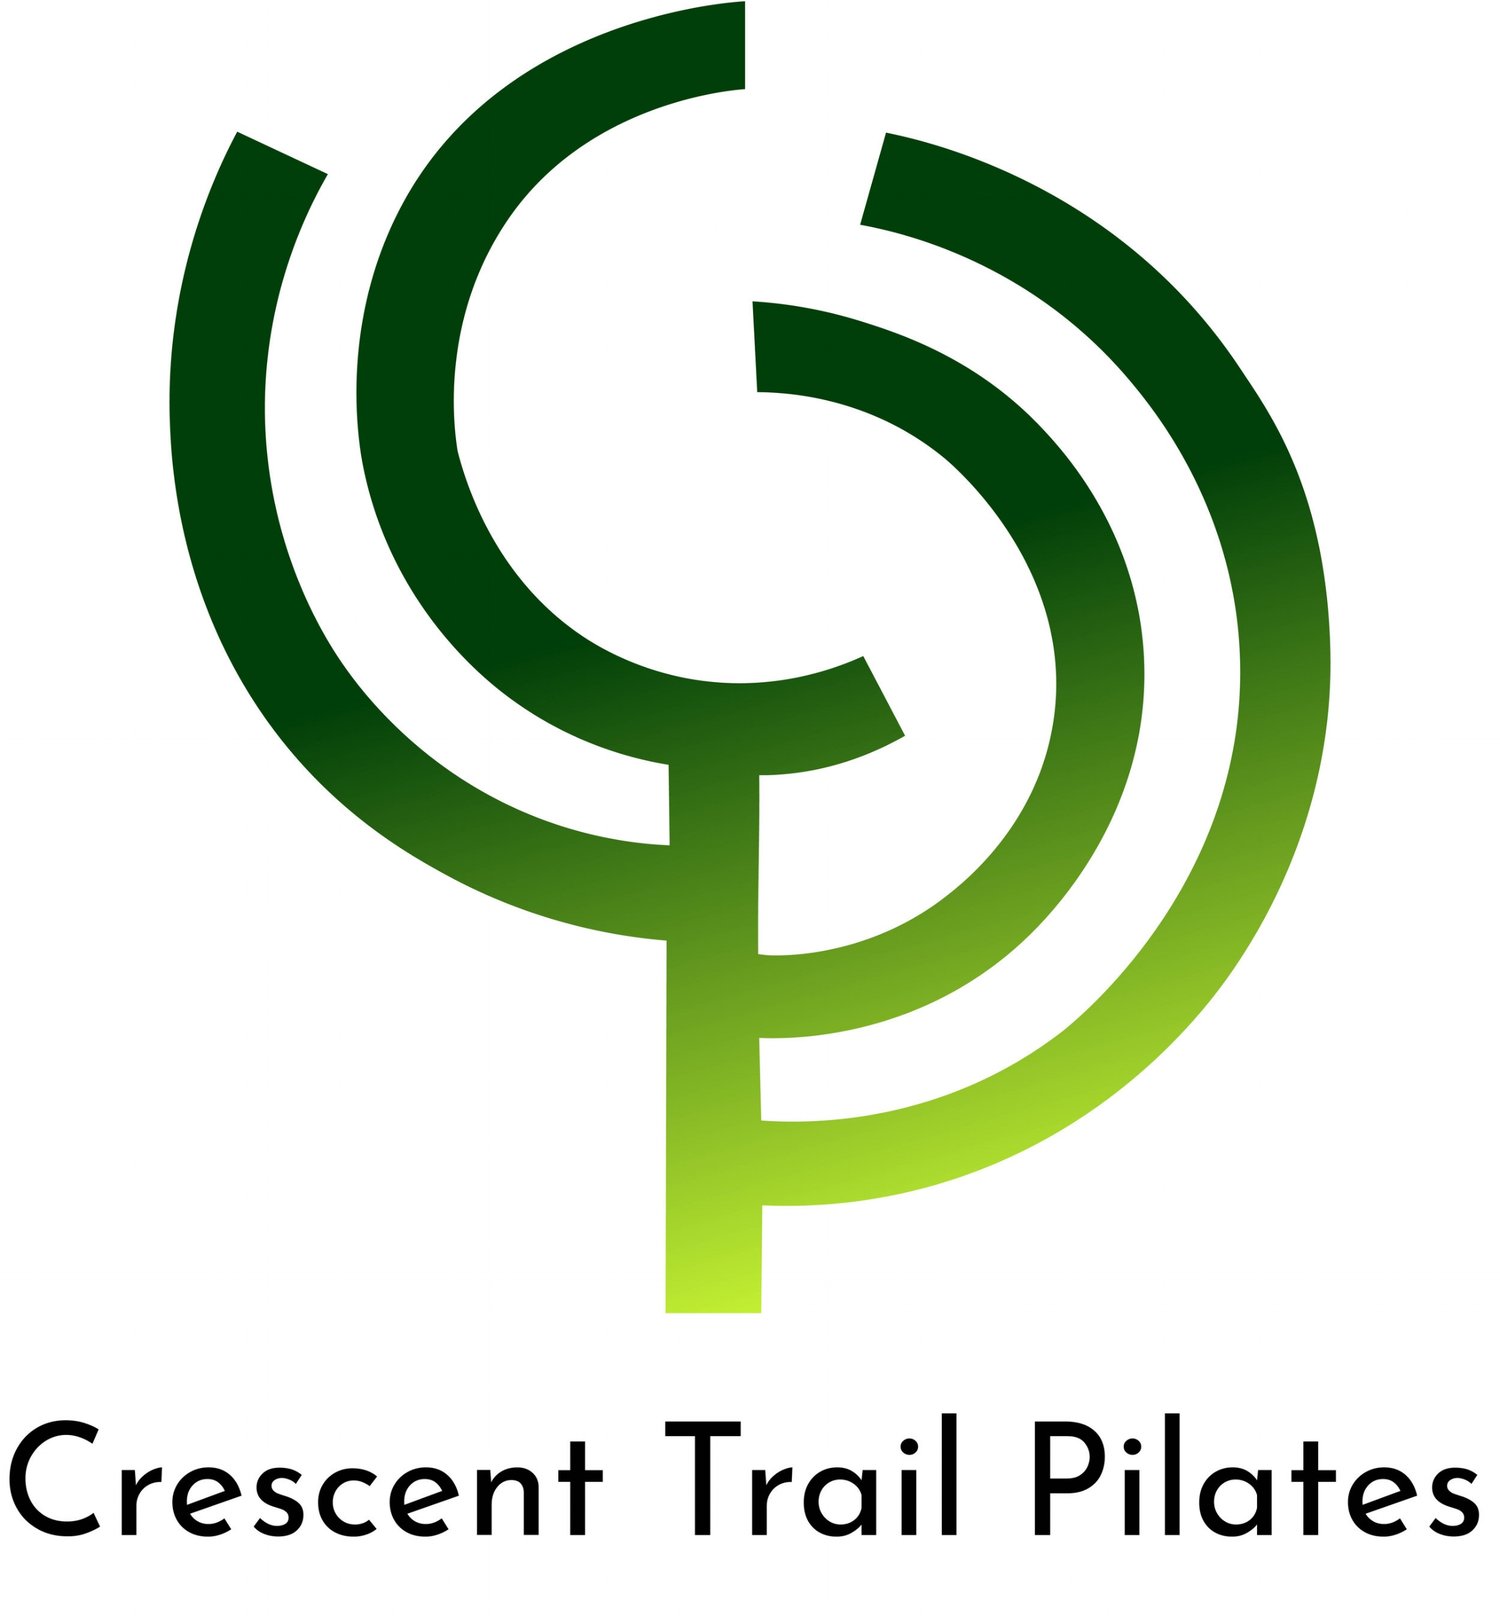 Crescent Trail Pilates